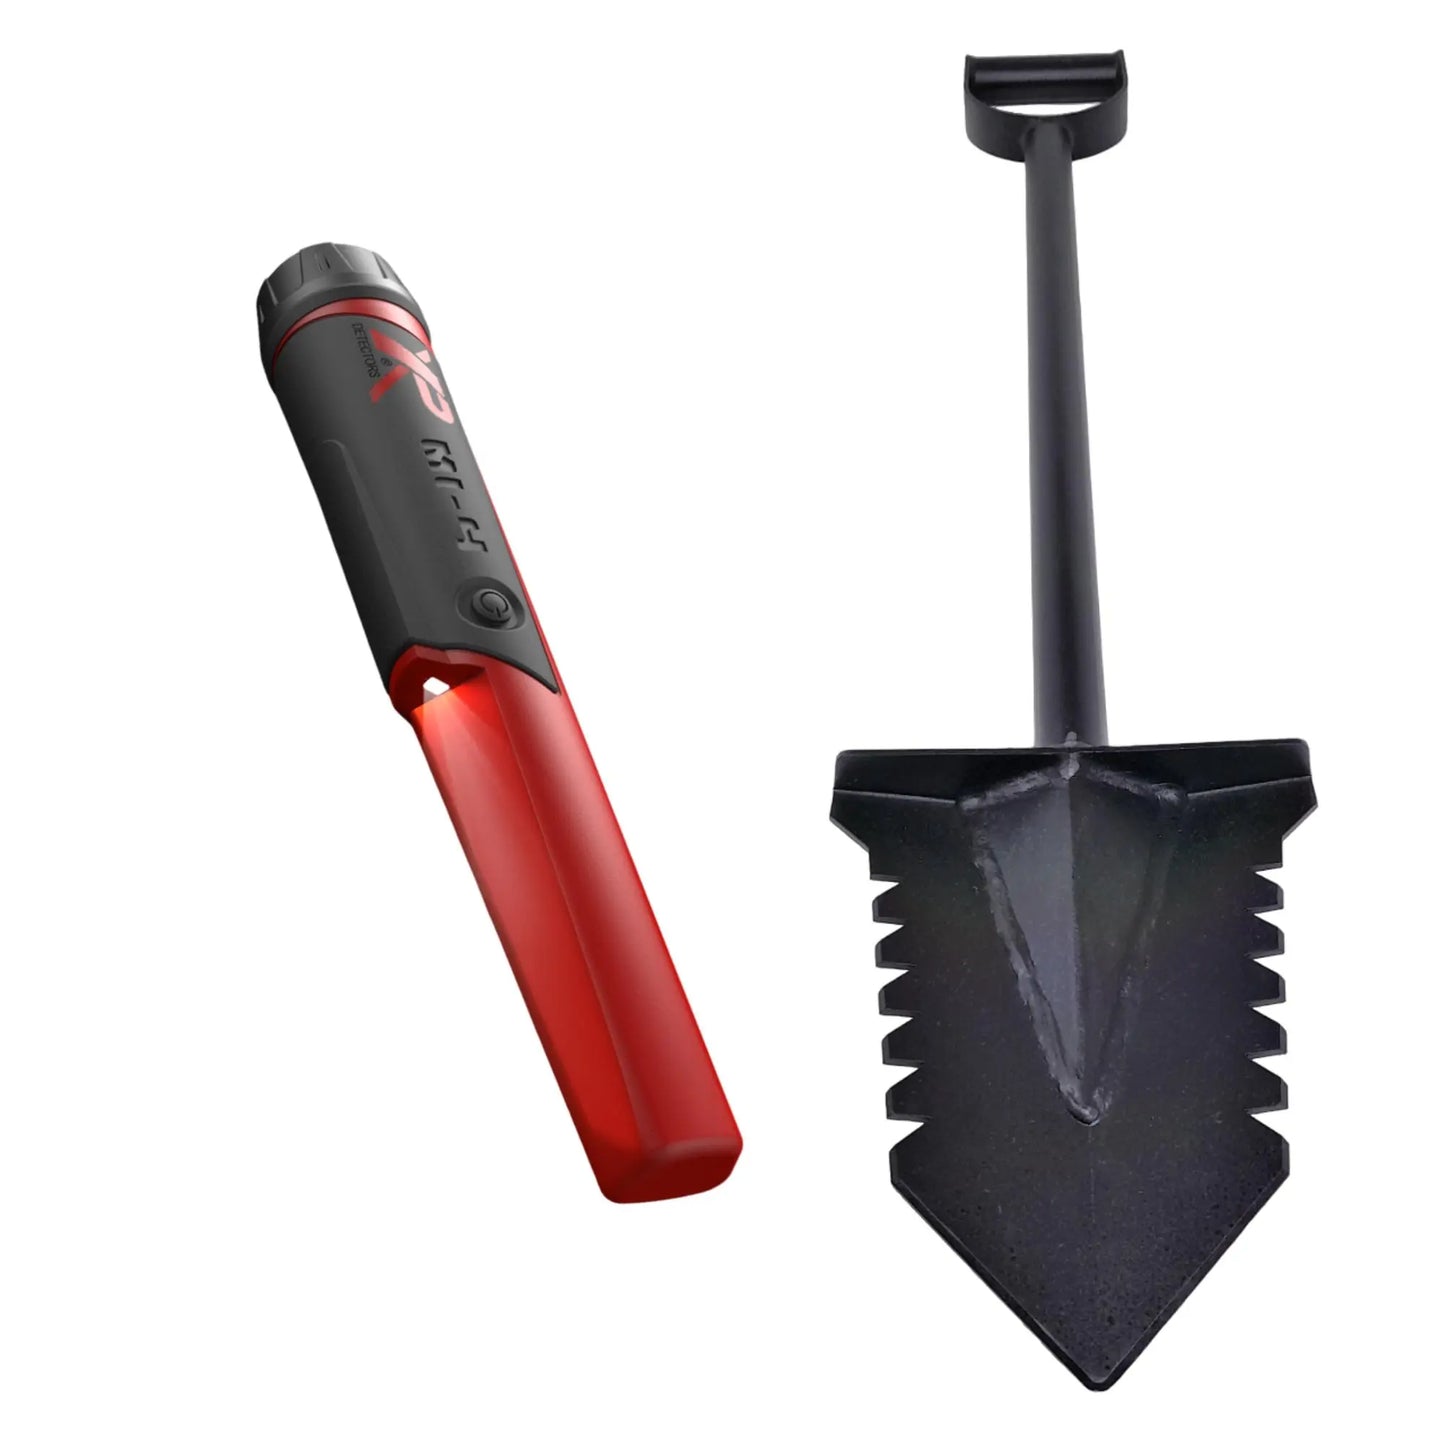 Agro Reaper digging tool + XP Mi4 Package Deal. Aussie Detectorist